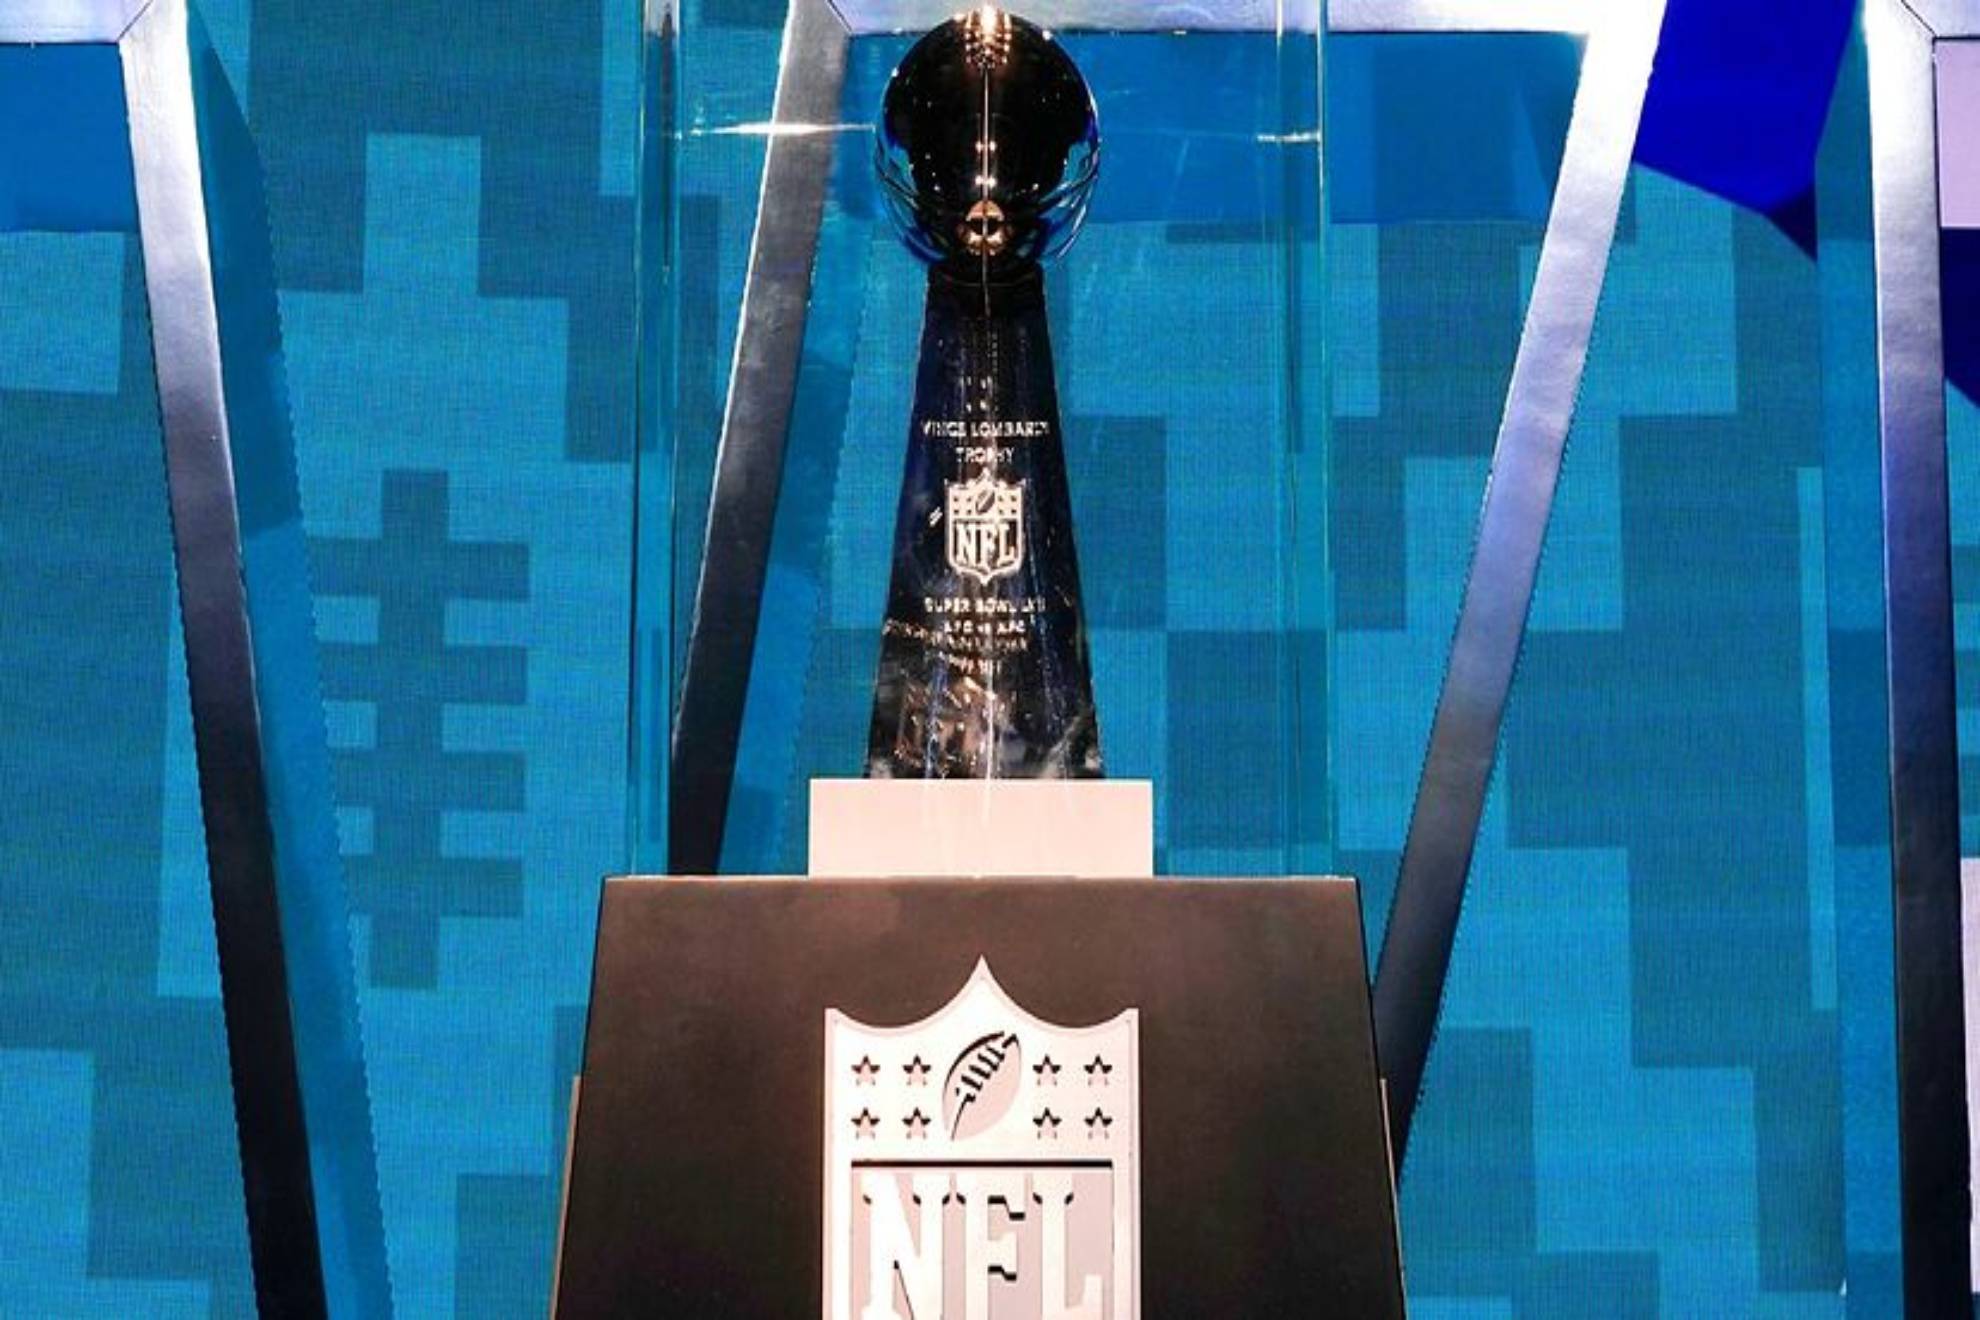 Super Bowl: De dnde viene el nombre Trofeo Vince Lombardi?